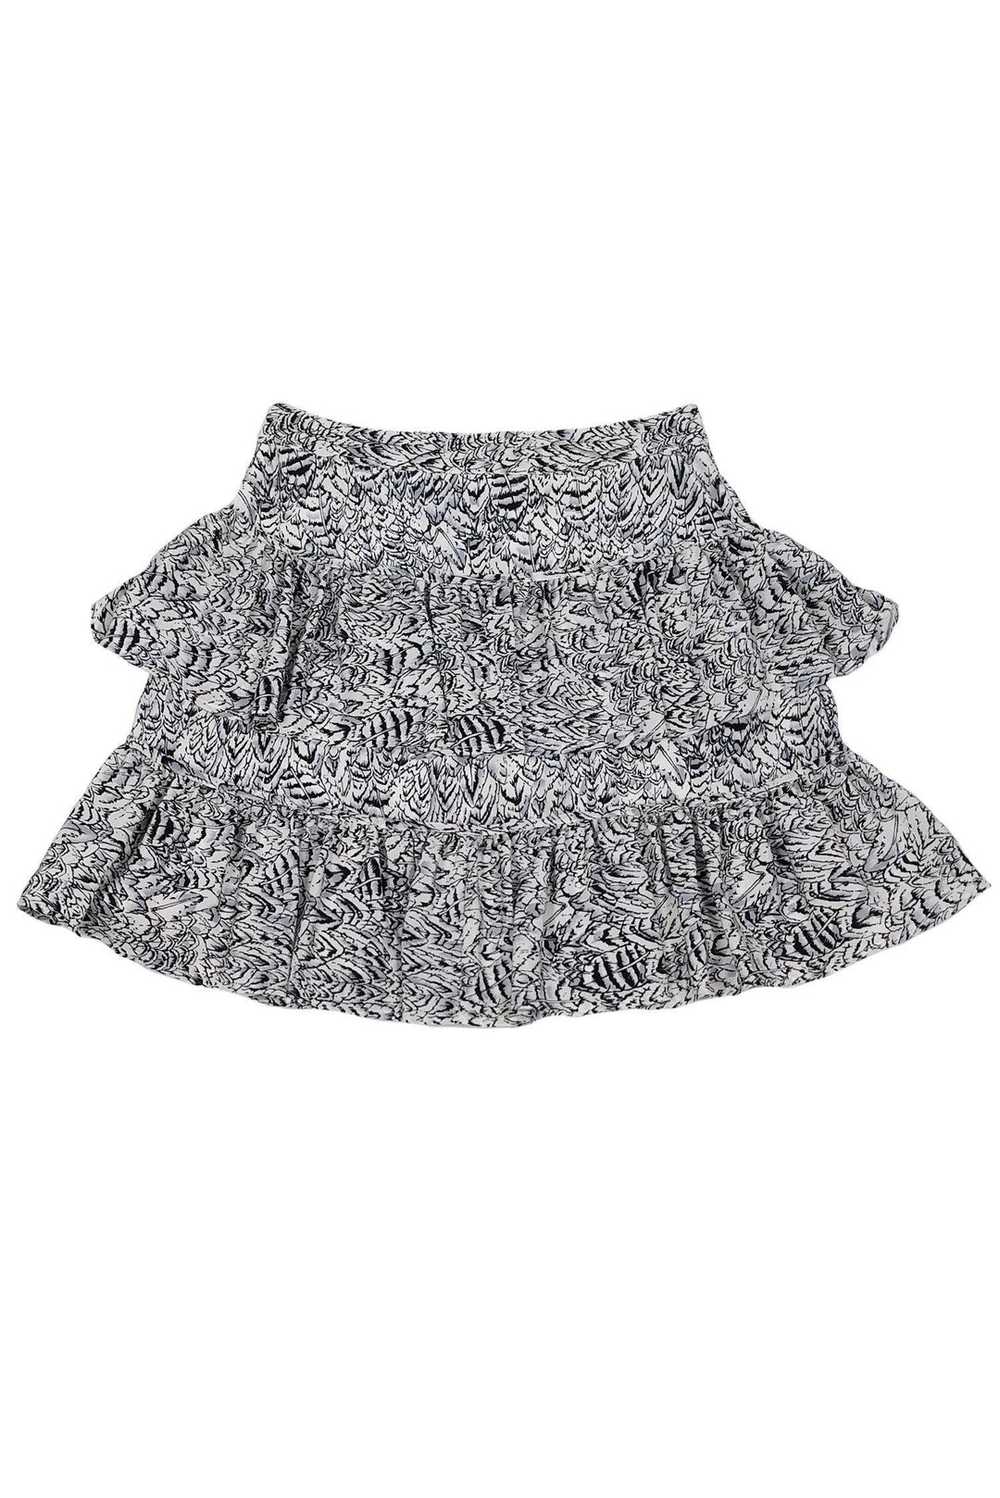 Reiss - White, Grey & Black Ruffle Skirt Sz 2 - image 2